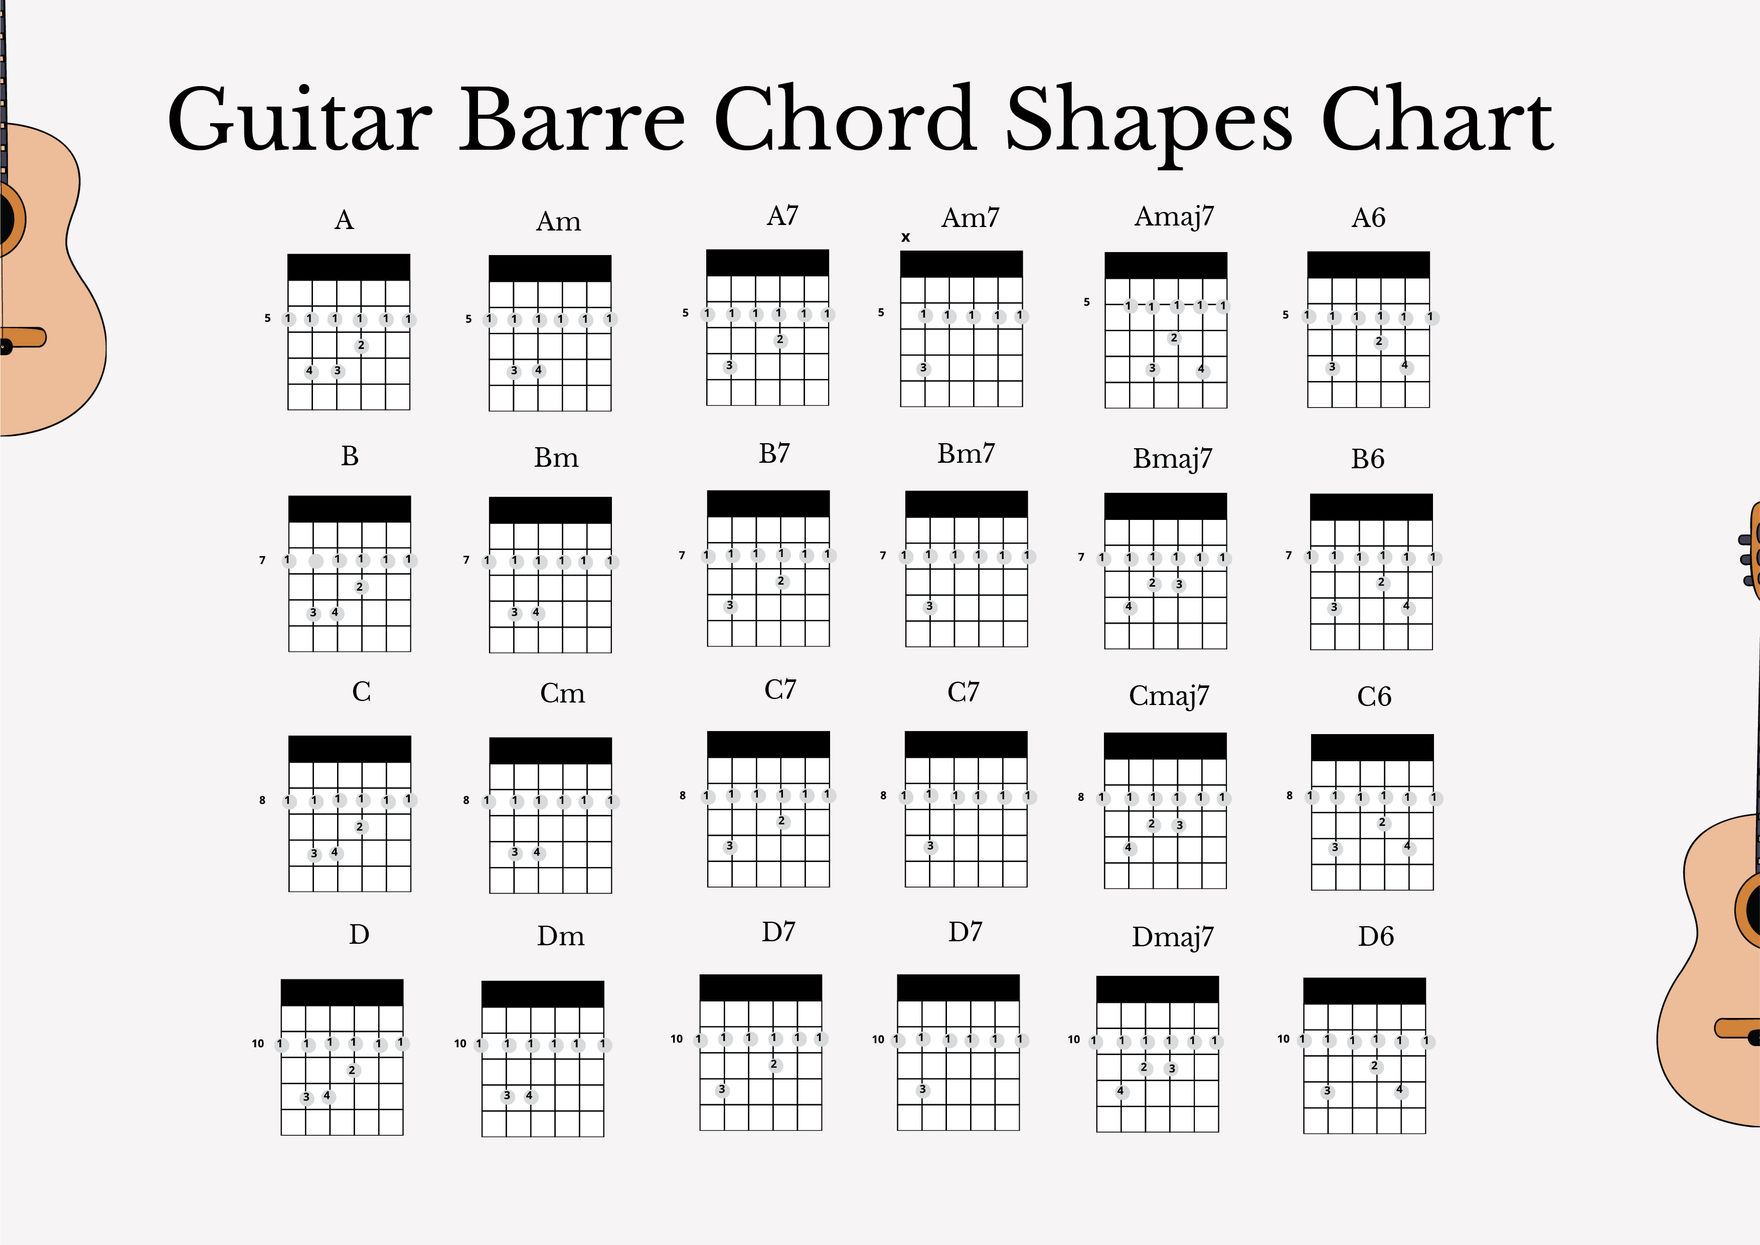 Guitar Barre Chord Shapes Chart